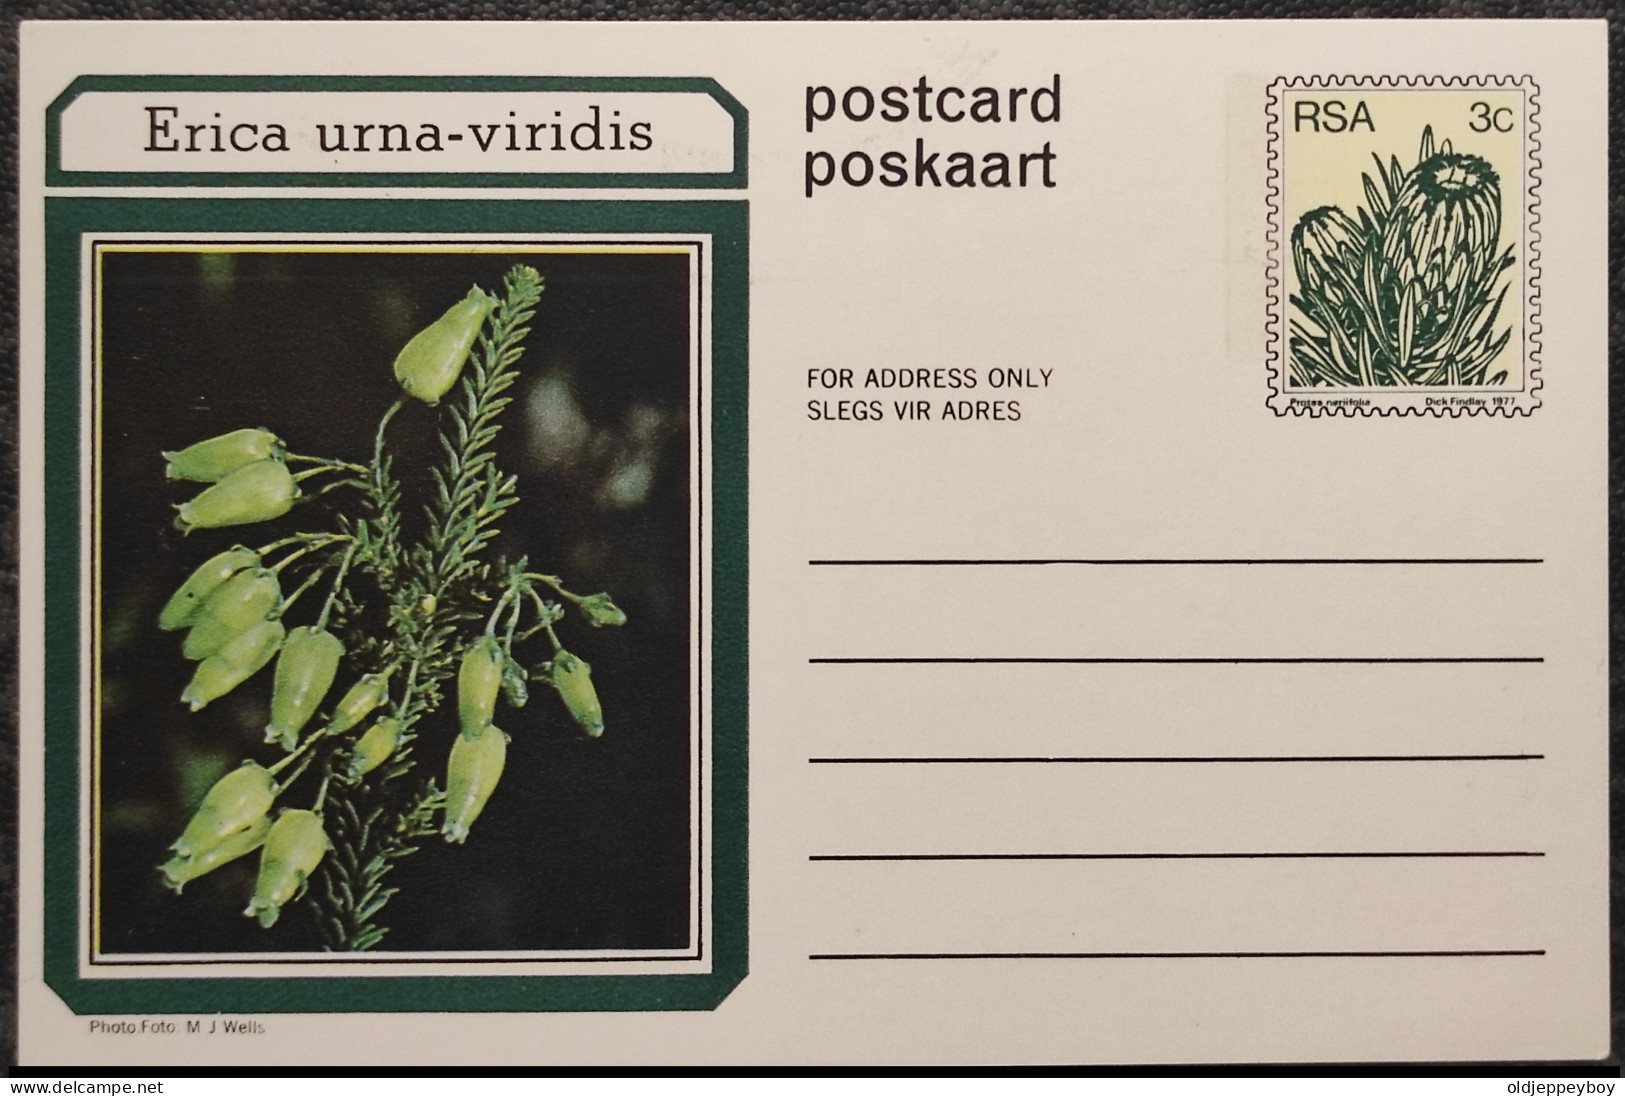 8c SOUTH AFRICA Postal STATIONERY CARD Illus ERICA URNA VIRIDIS FLOWER Cover Stamps Flowers Rsa - Briefe U. Dokumente